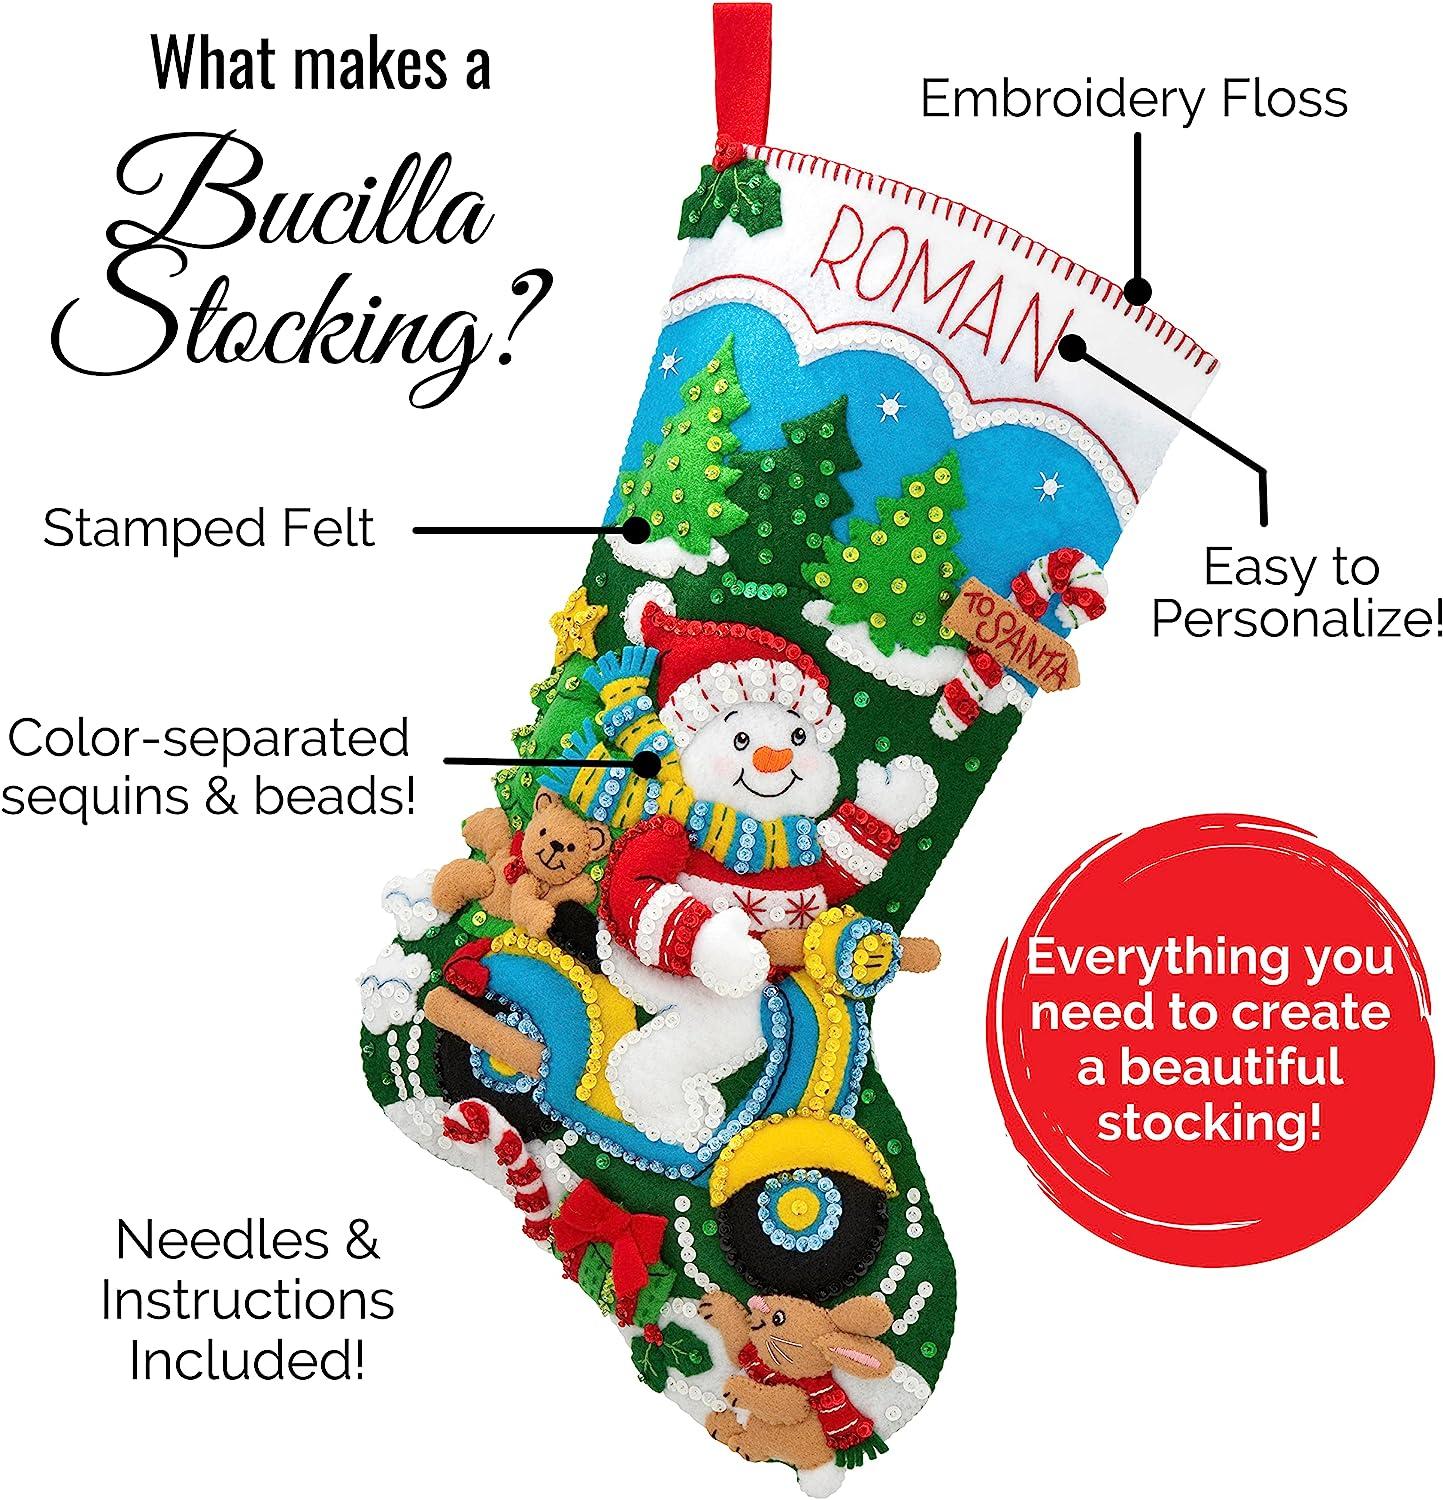 Plaid Bucilla Felt Christmas Stocking Kit, Stocking Kit with Santa and  Frosty; Stocking; Christmas Stocking Kit, Bucilla Stocking, Stocking